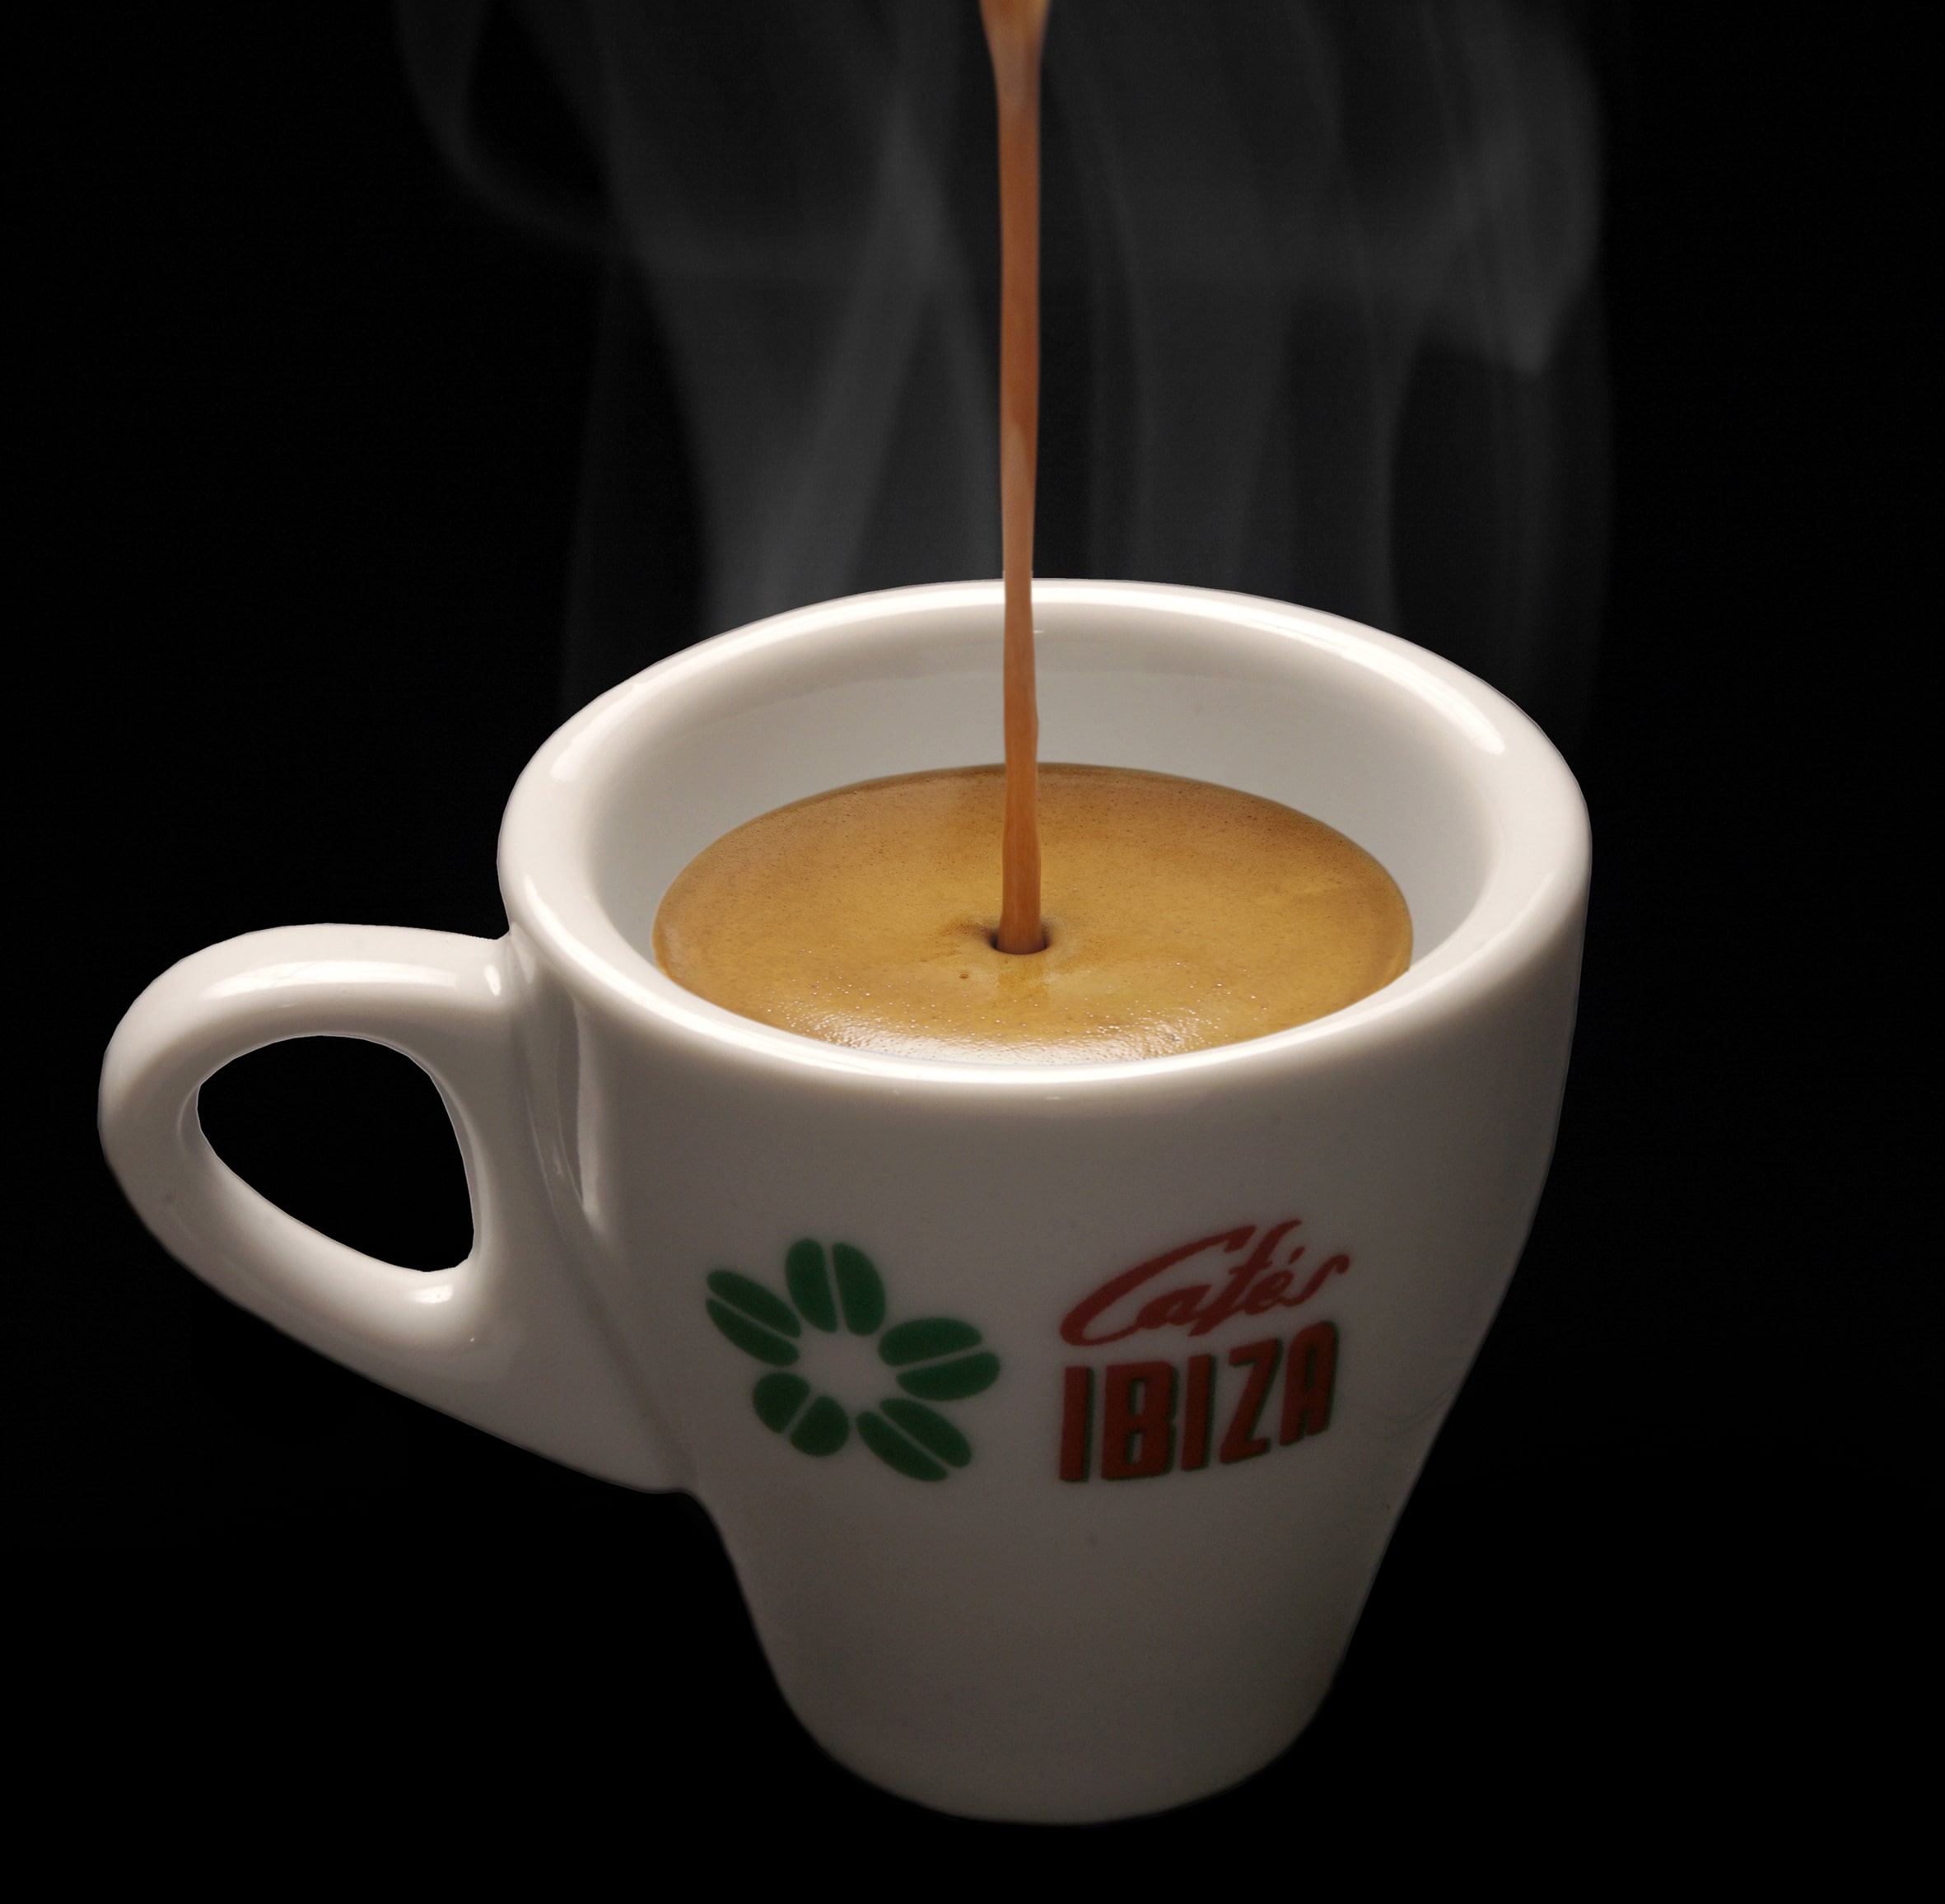 Cafés Ibiza espresso